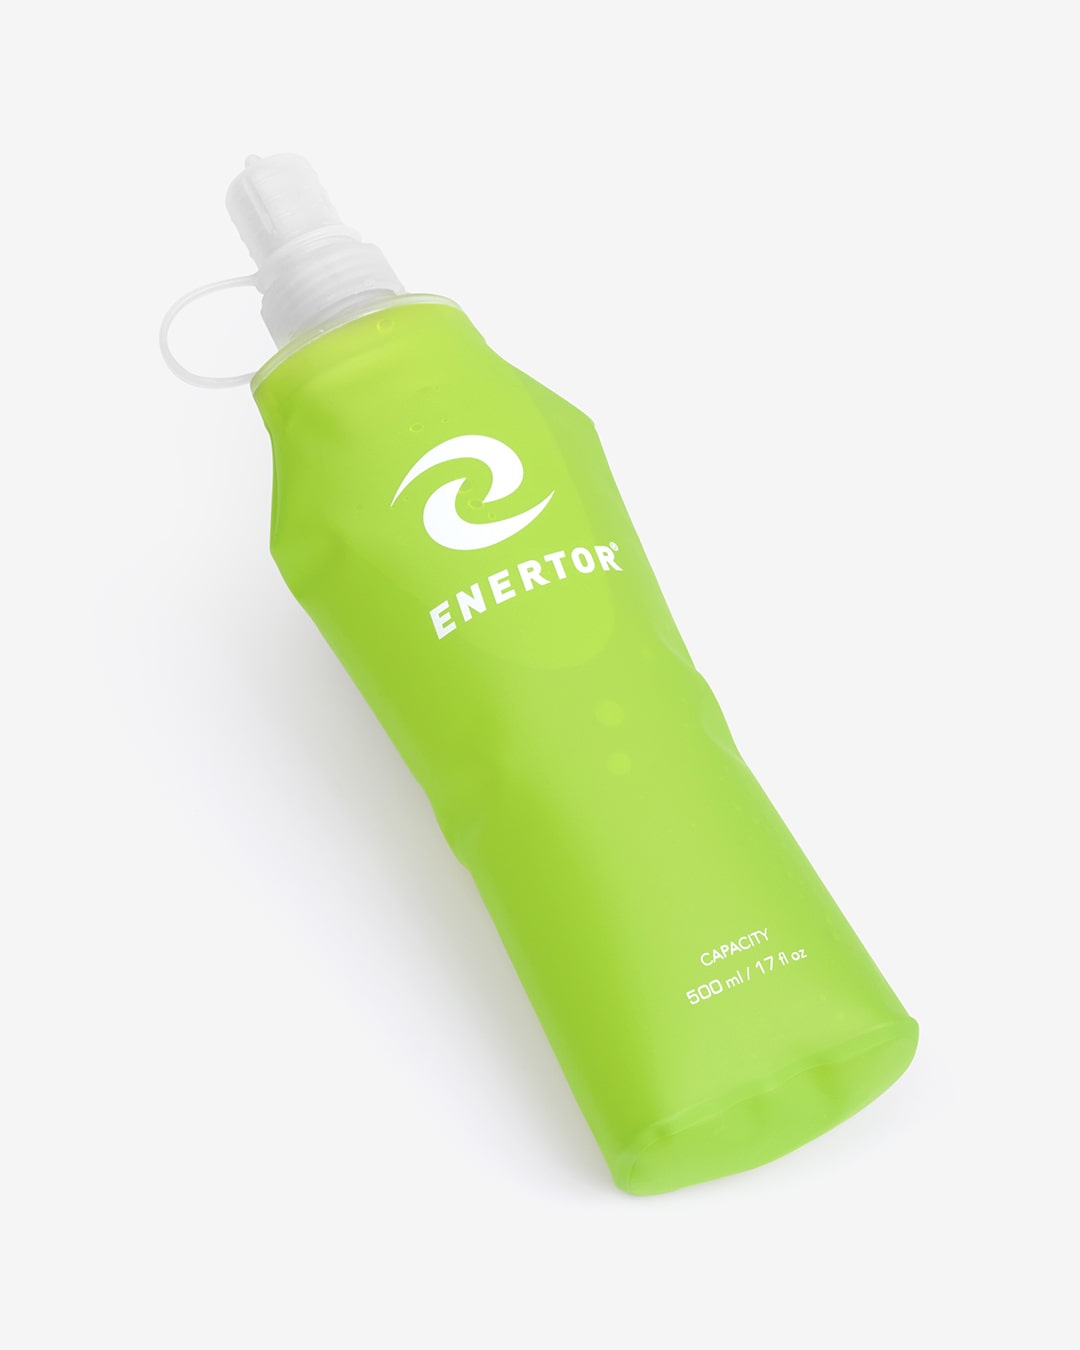 Enertor collapsable water bottle, soft pouch liquid carrier in green - Full length